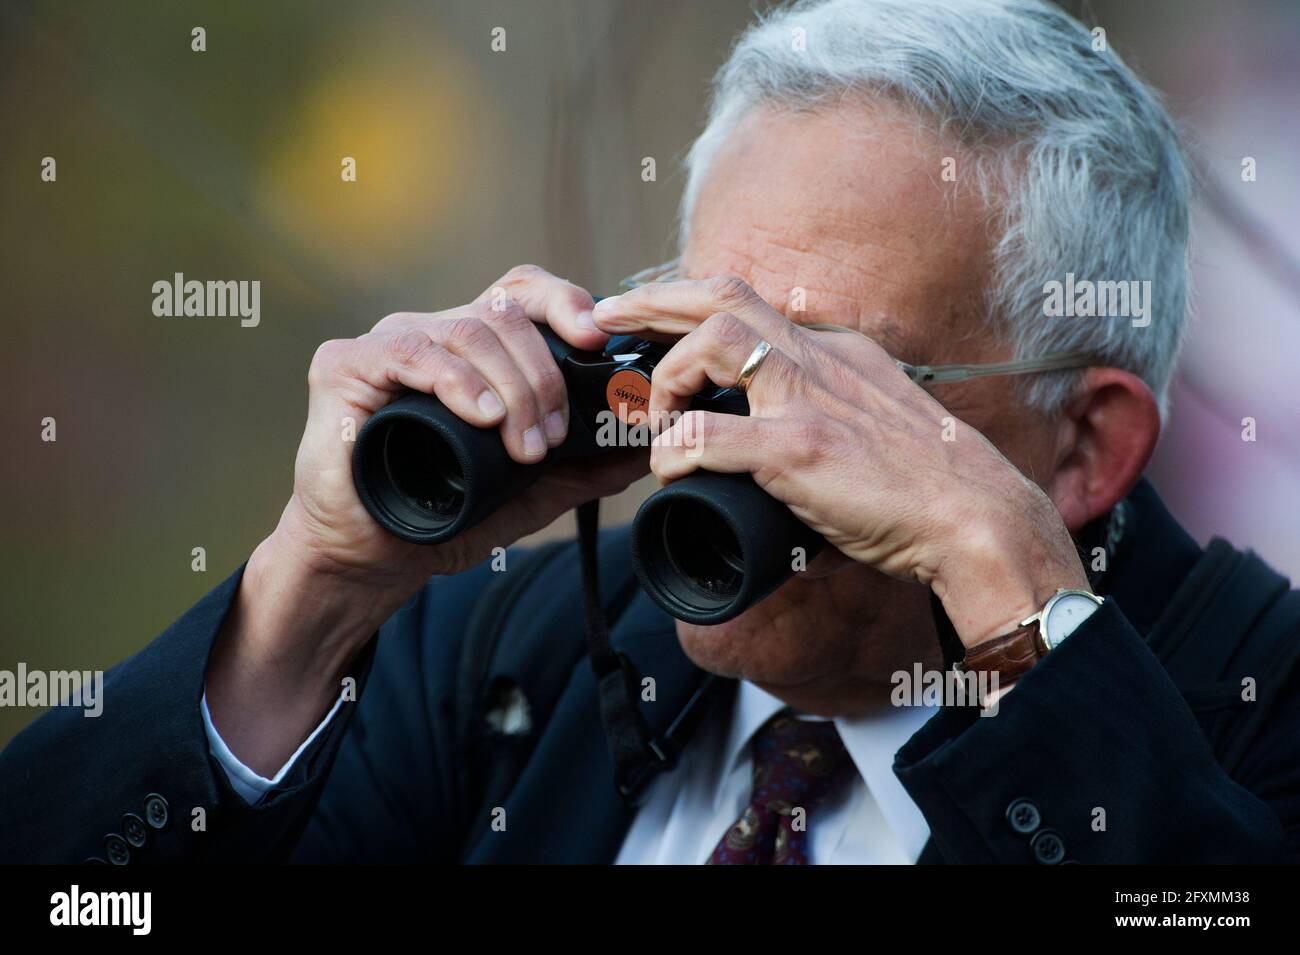 Well dressed elderly businessman in suit and tie birding with binoculars Stock Photo